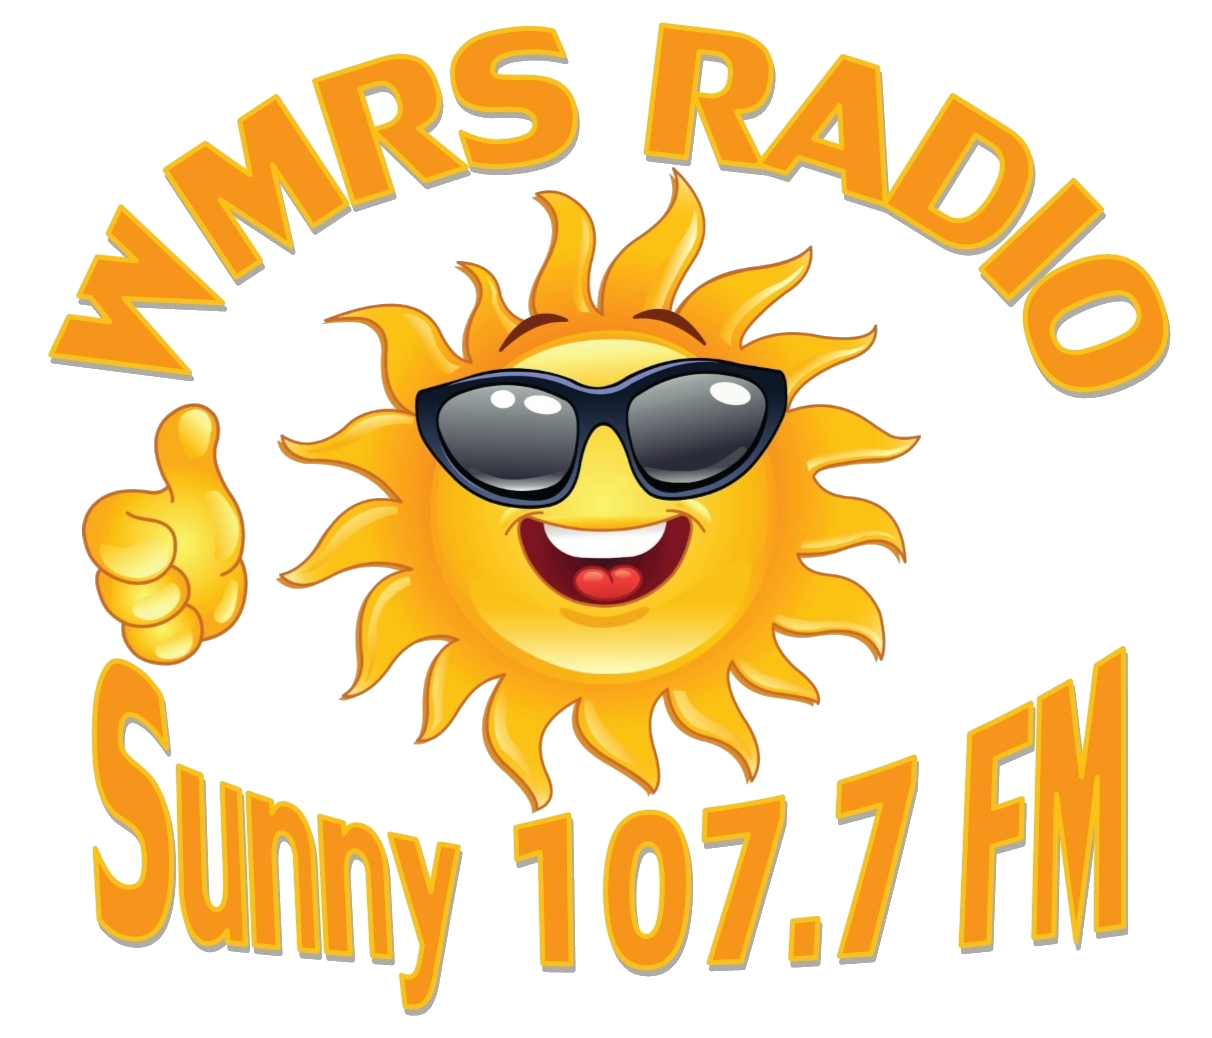 WMRS Radio/Sunny 107.7 FM